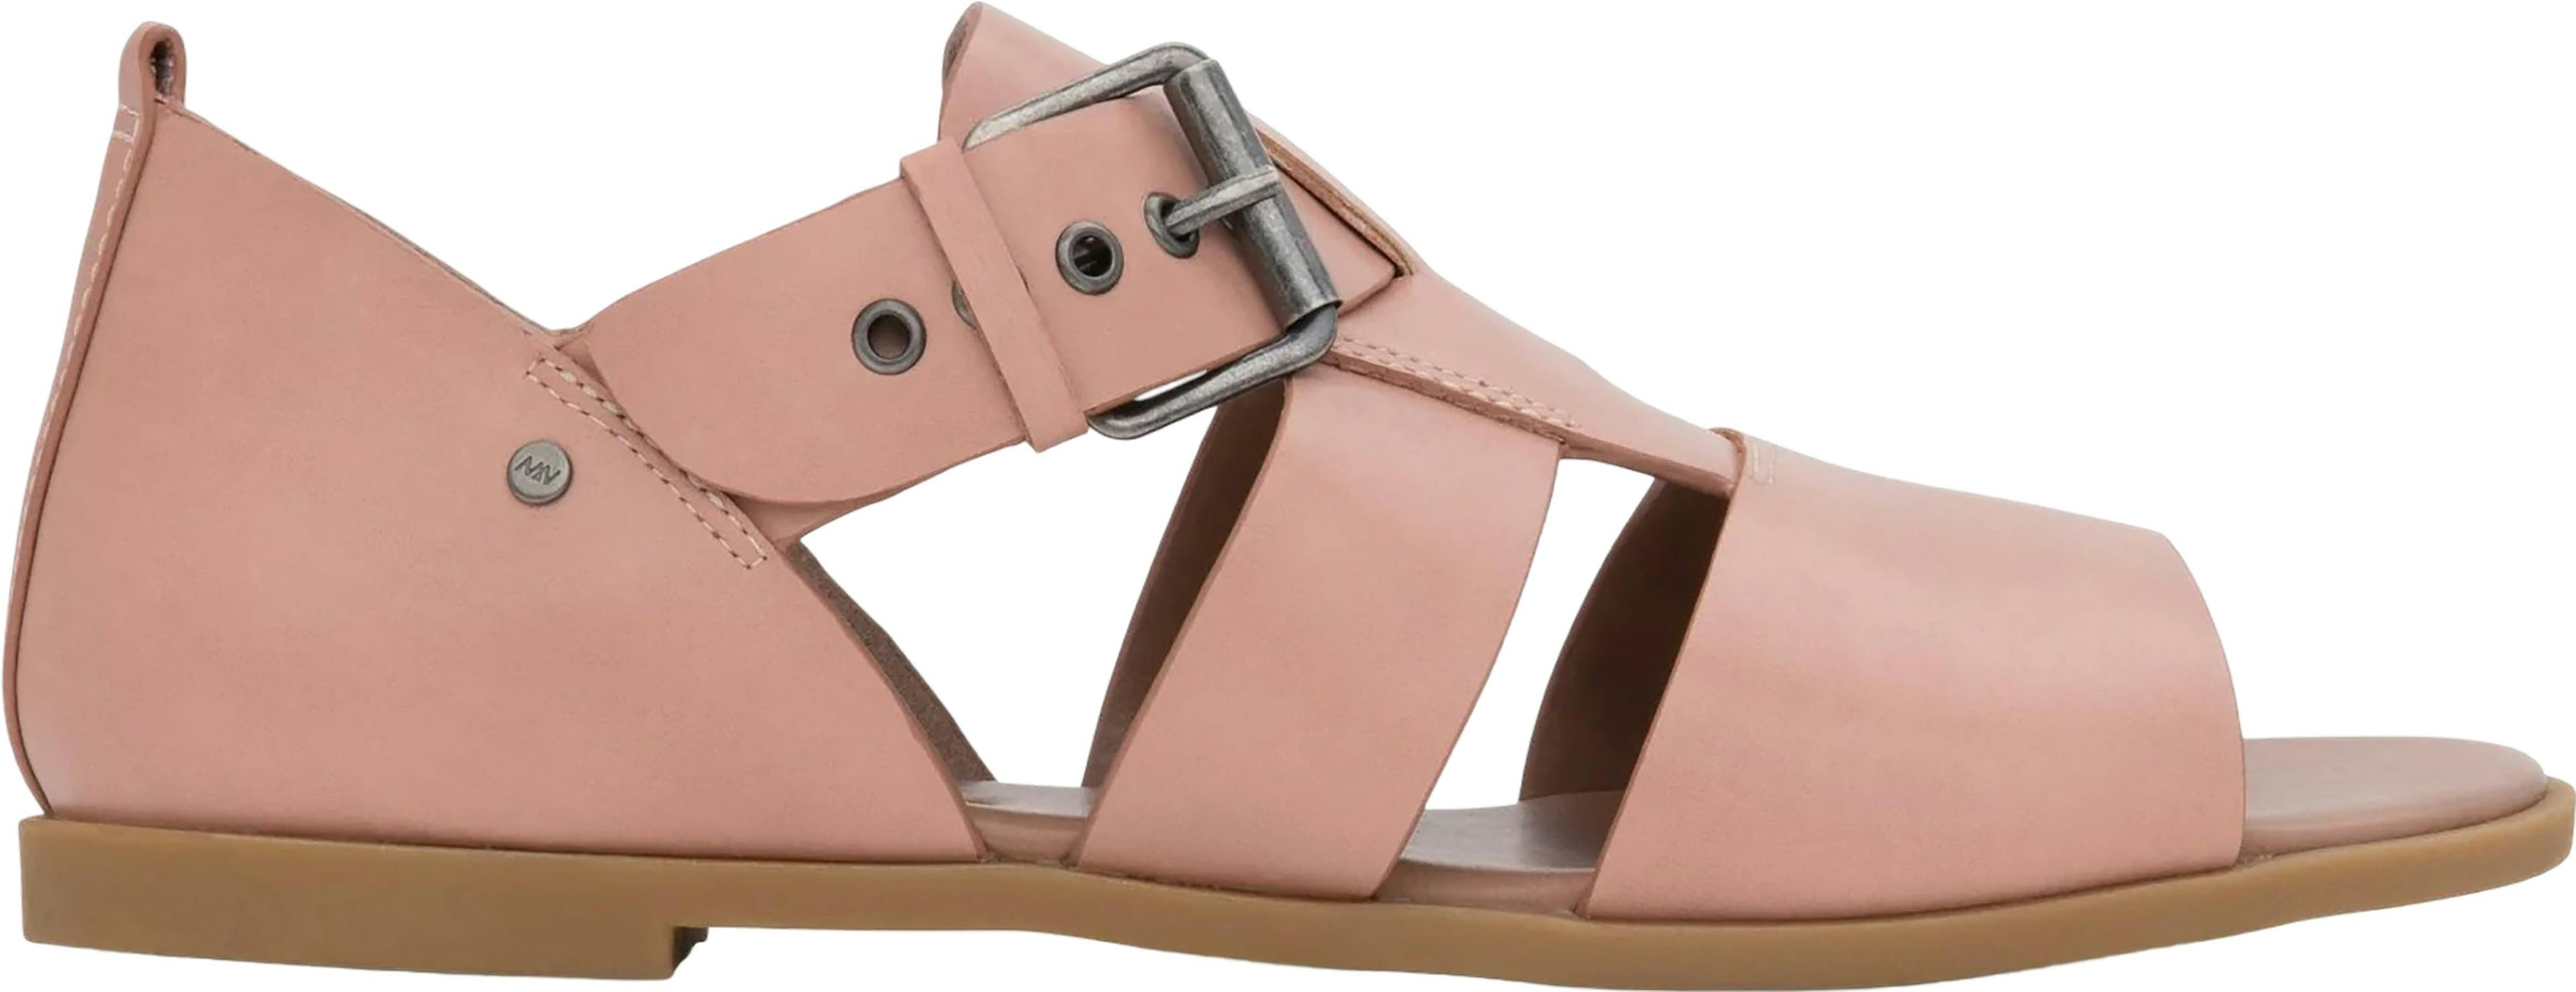 Product image for Eboni Sandals - Women's